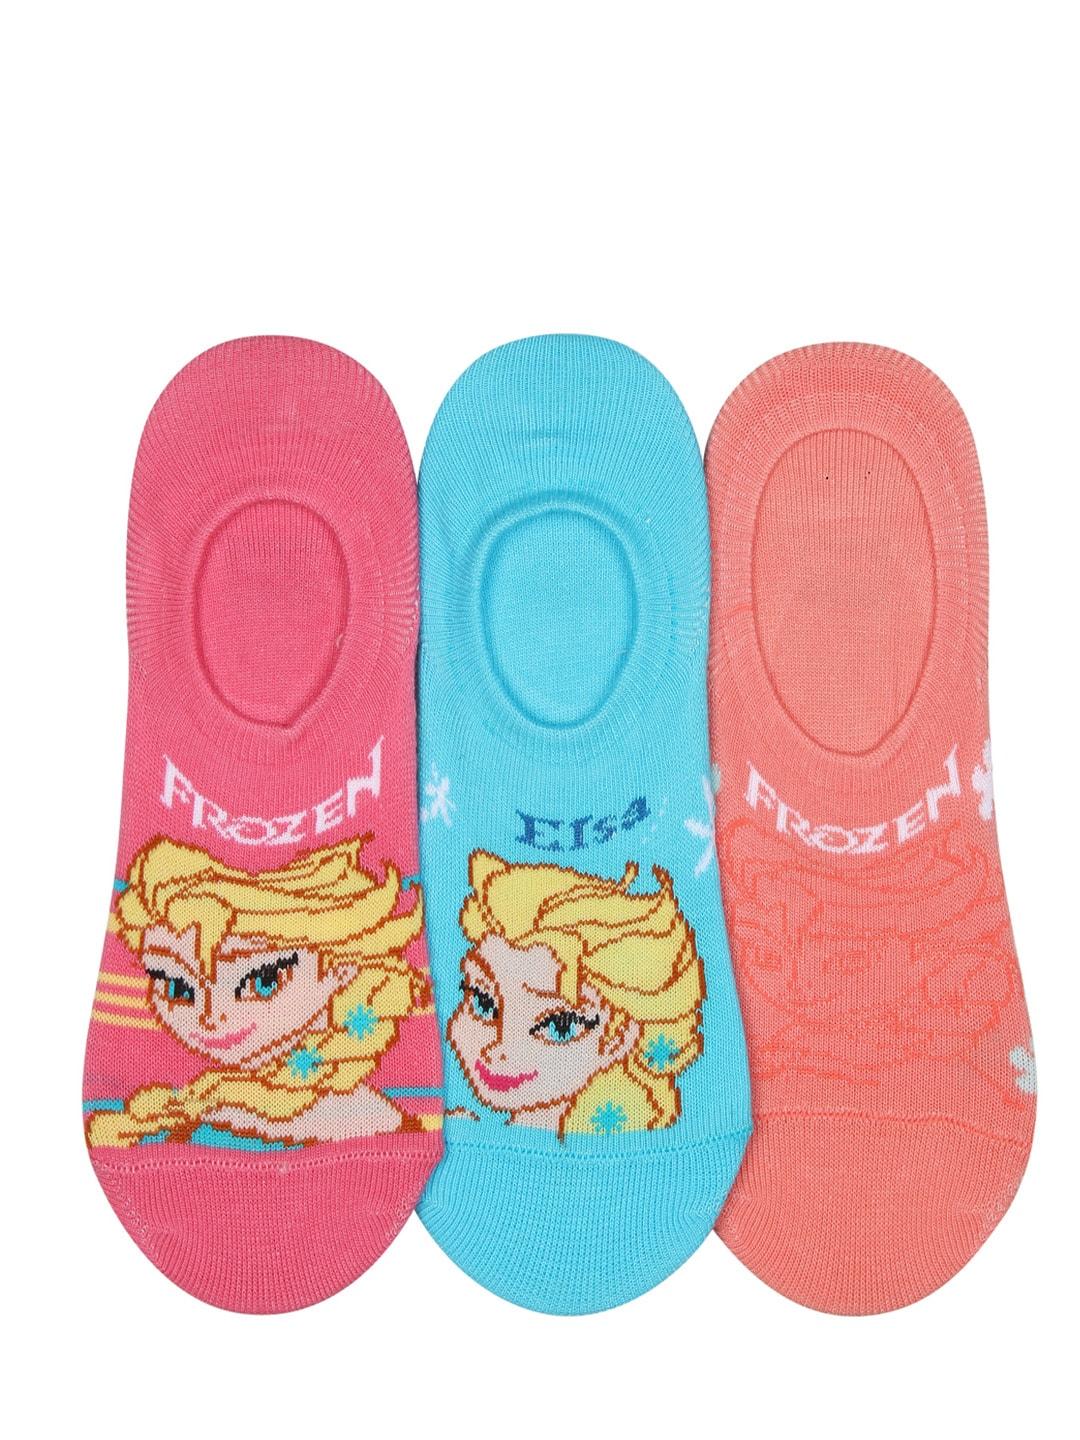 Supersox Girls Pack of 3 Assorted Disney Frozen Shoe Liners